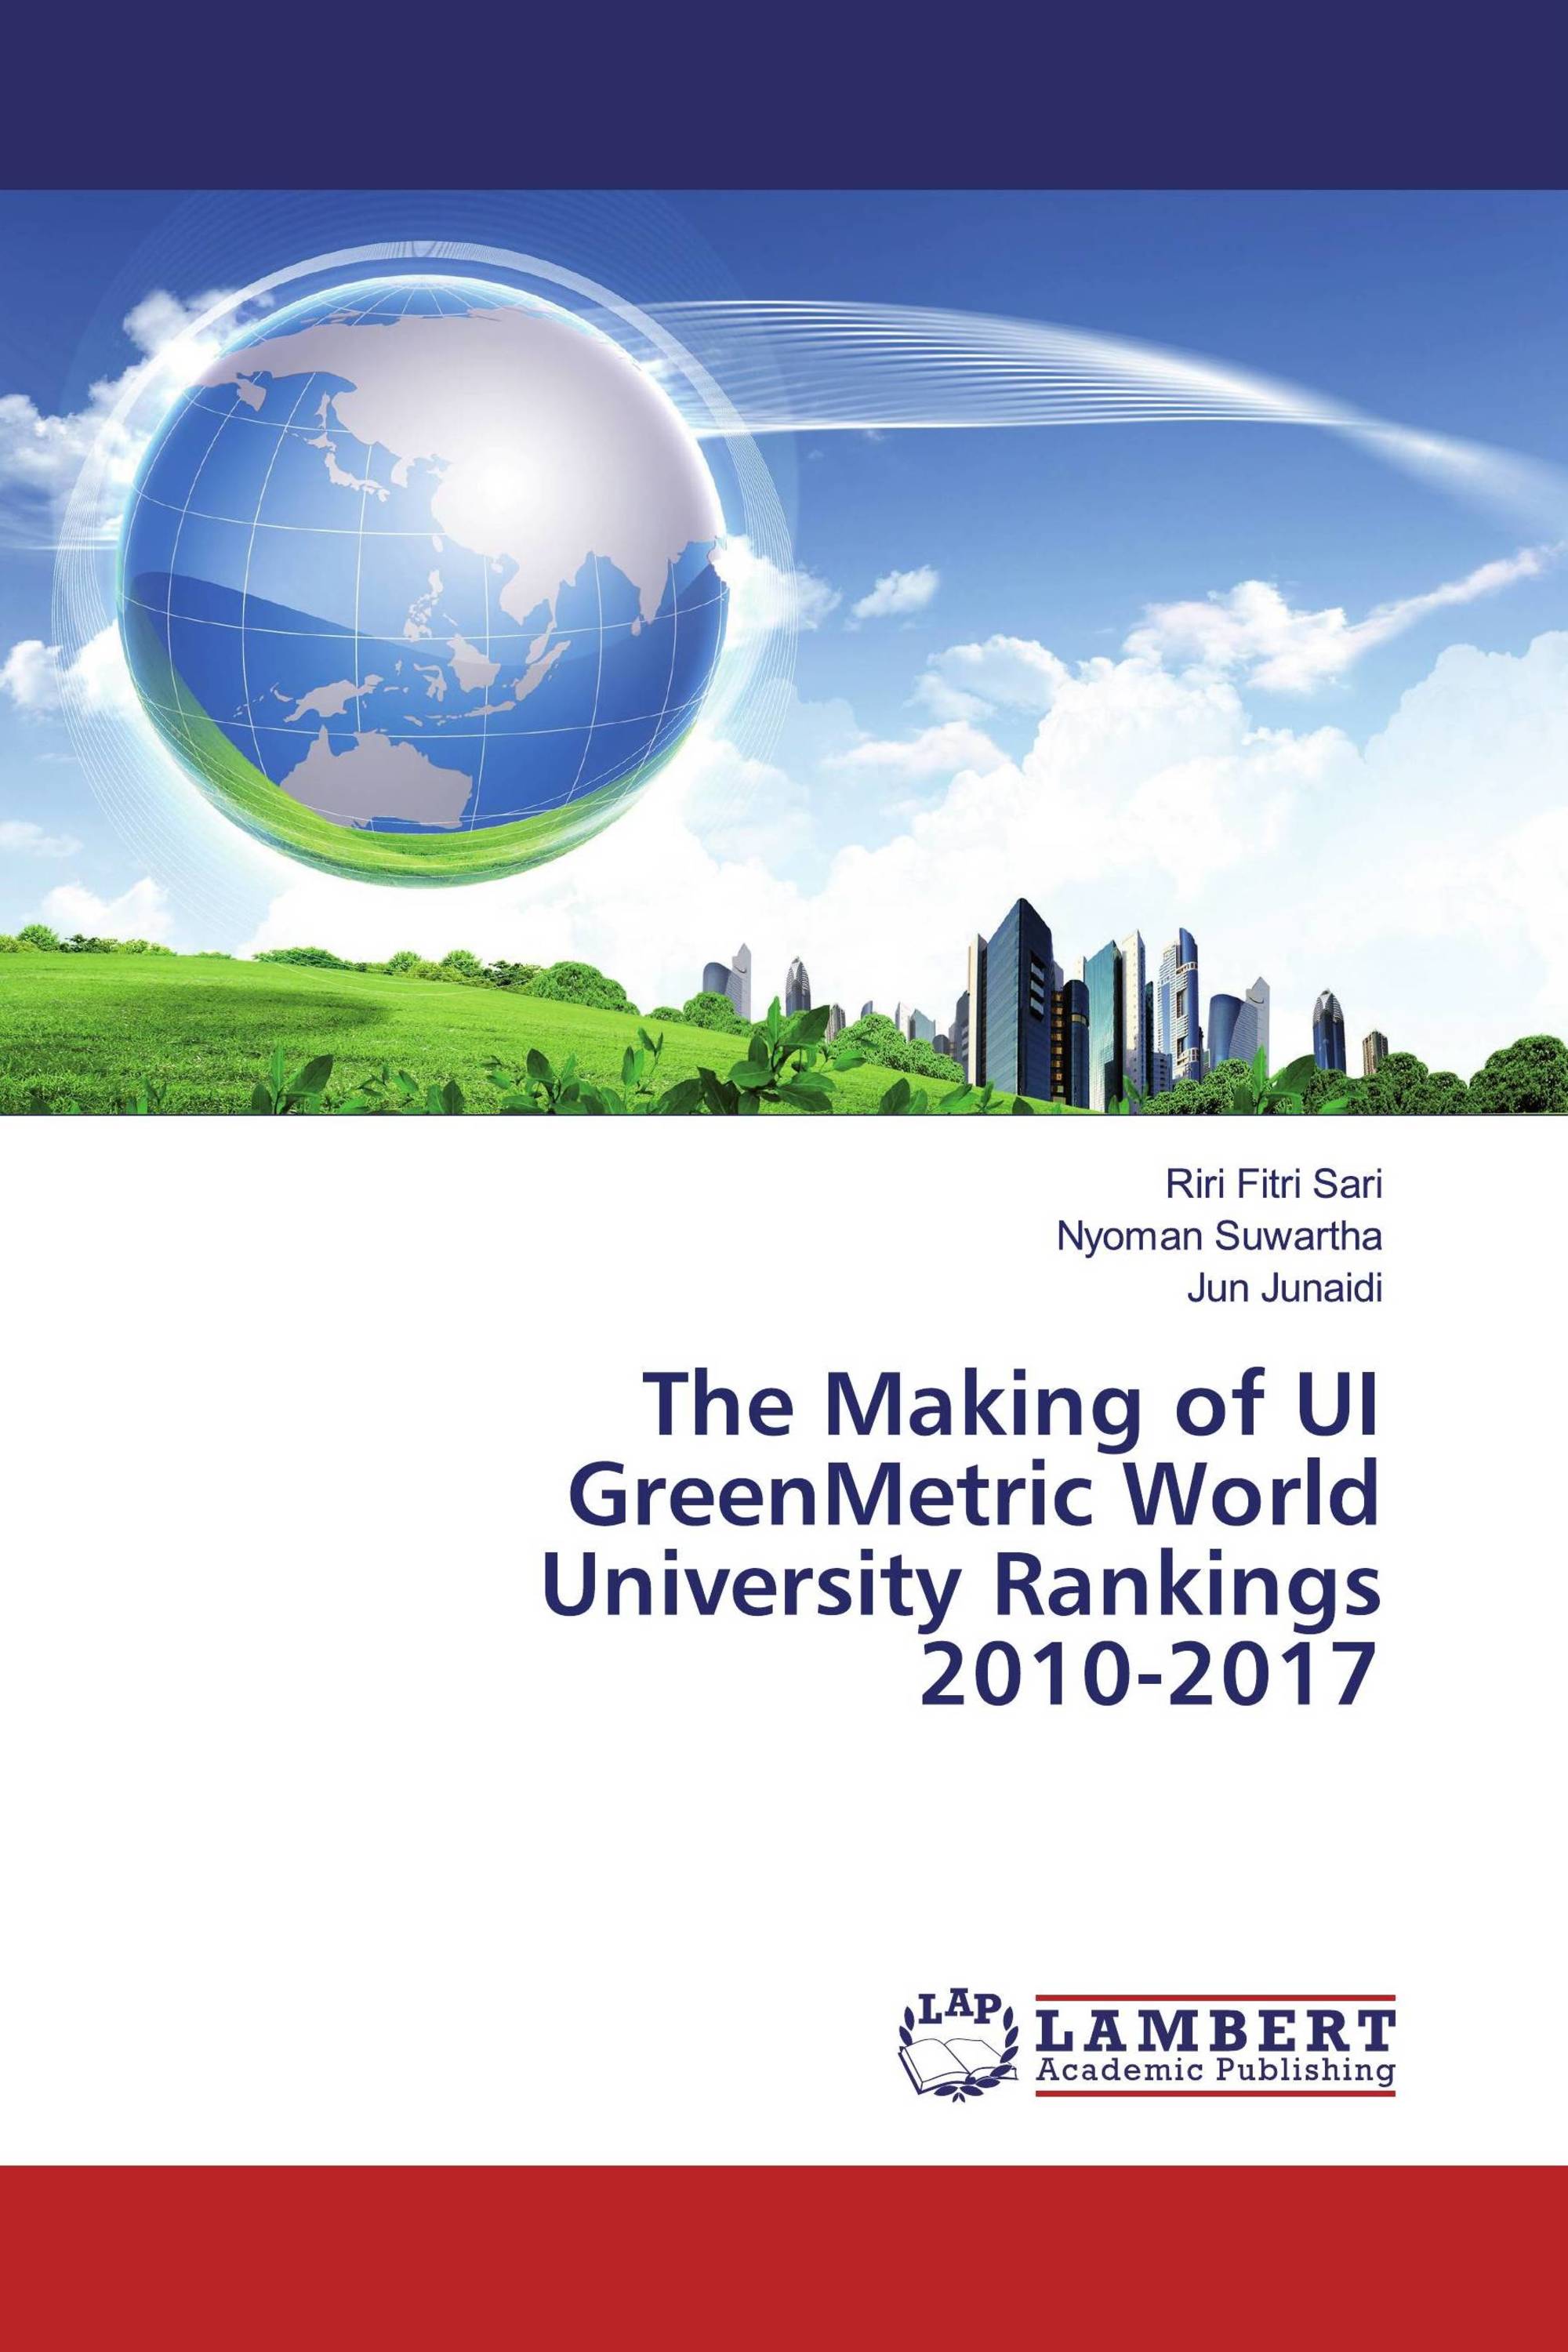 The Making of UI GreenMetric World University Rankings 2010-2017